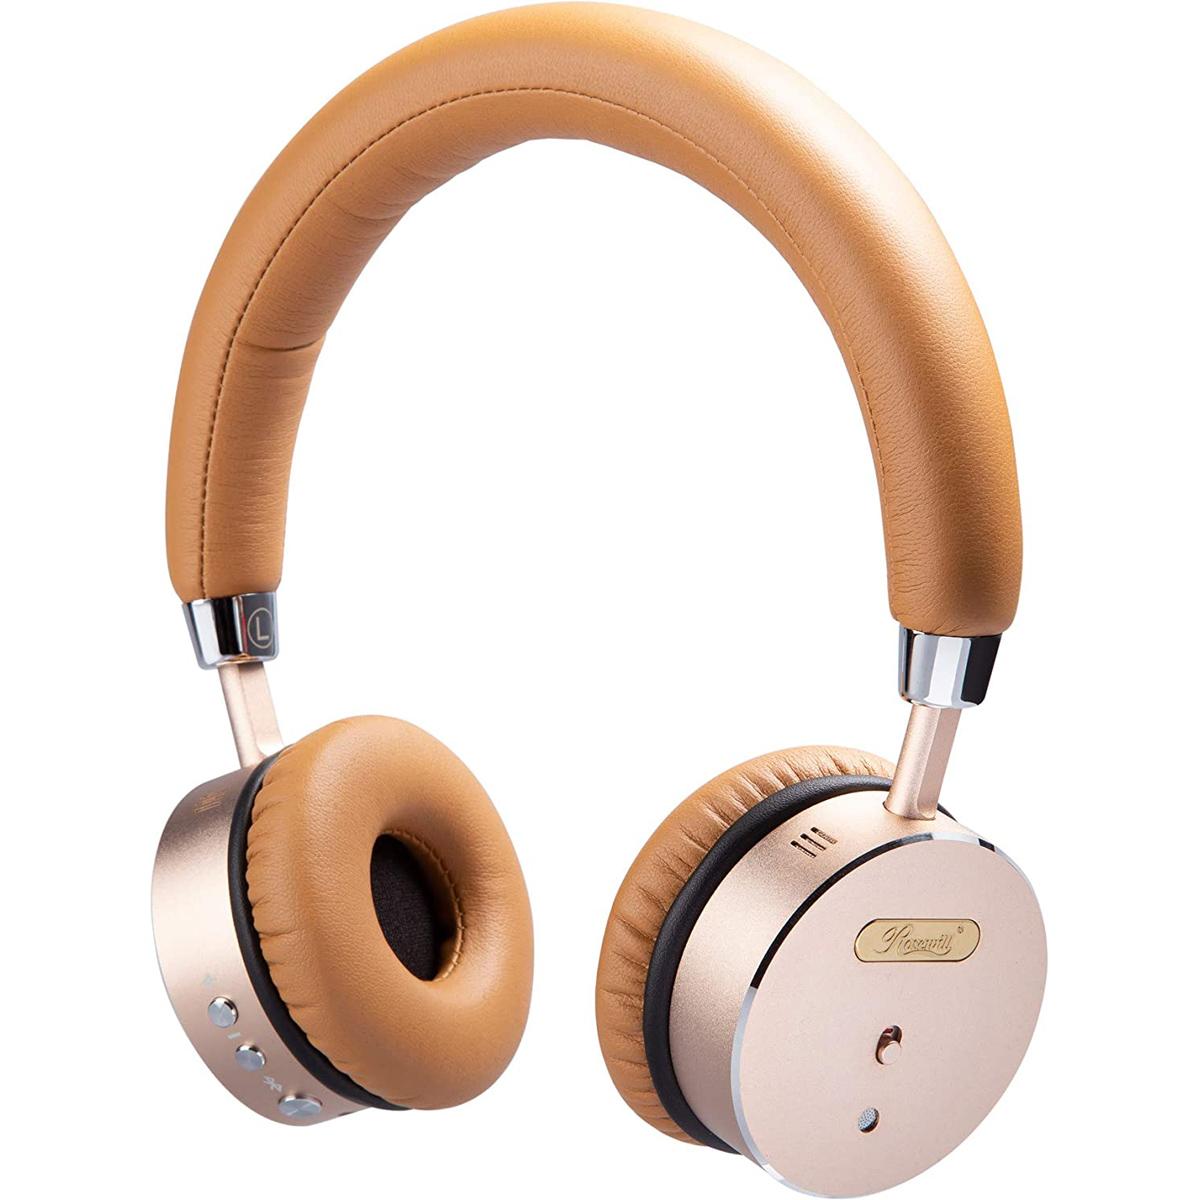 2 Rosewill RW-TH68N Metallic On-Ear Bluetooth Headphones for $34.99 Shipped